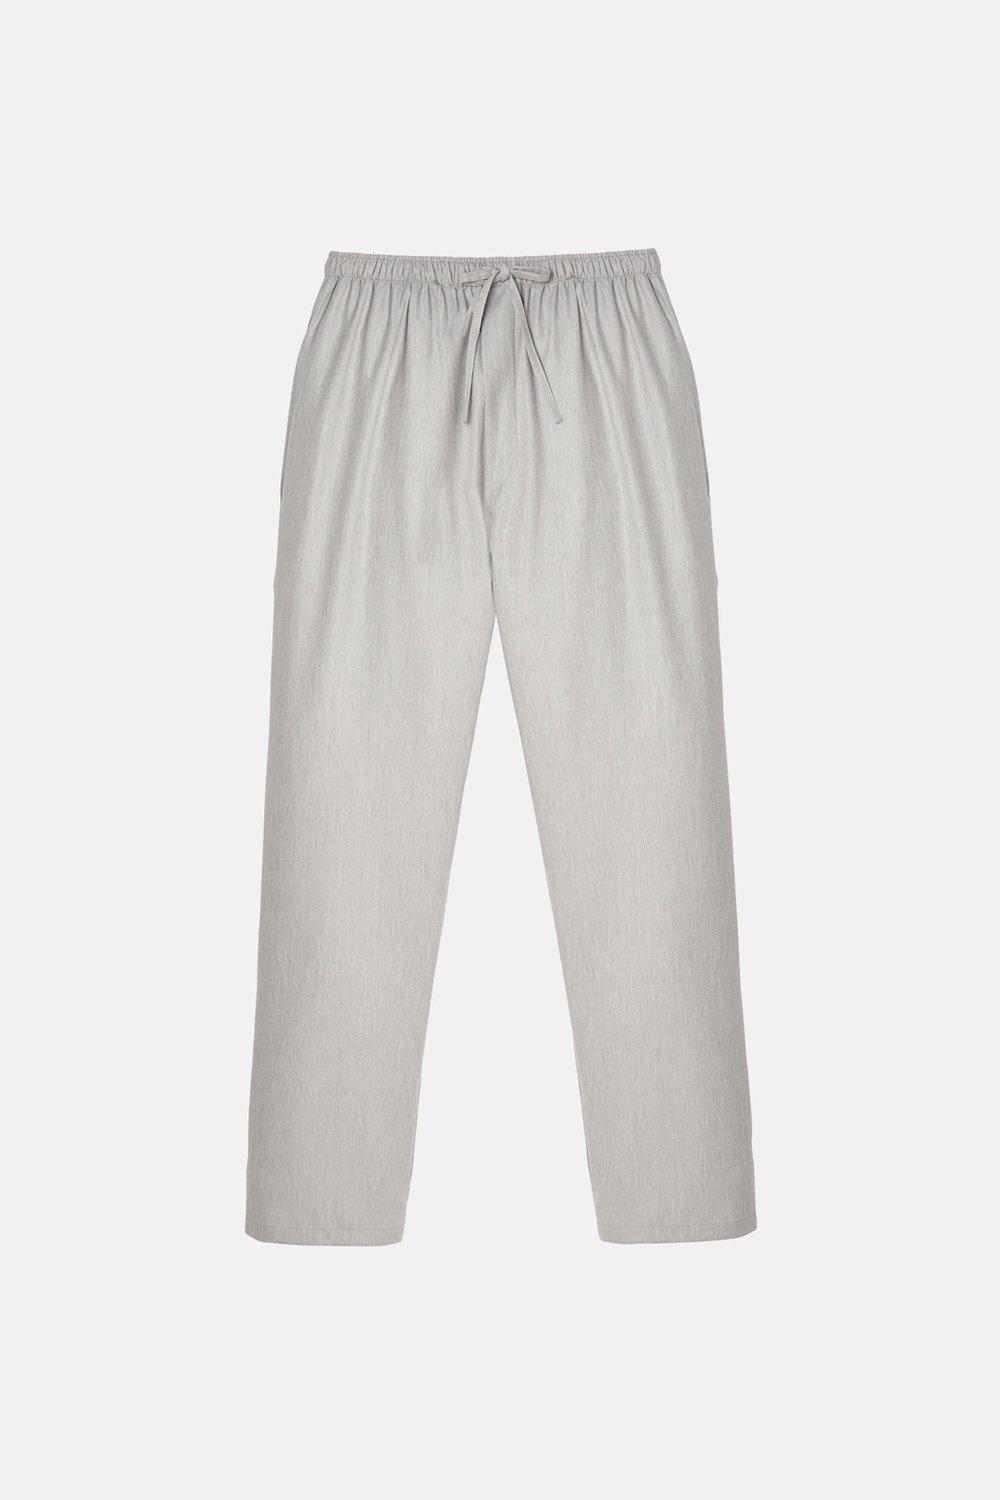 'Armoury' Herringbone Cotton Twill Pyjama Trousers